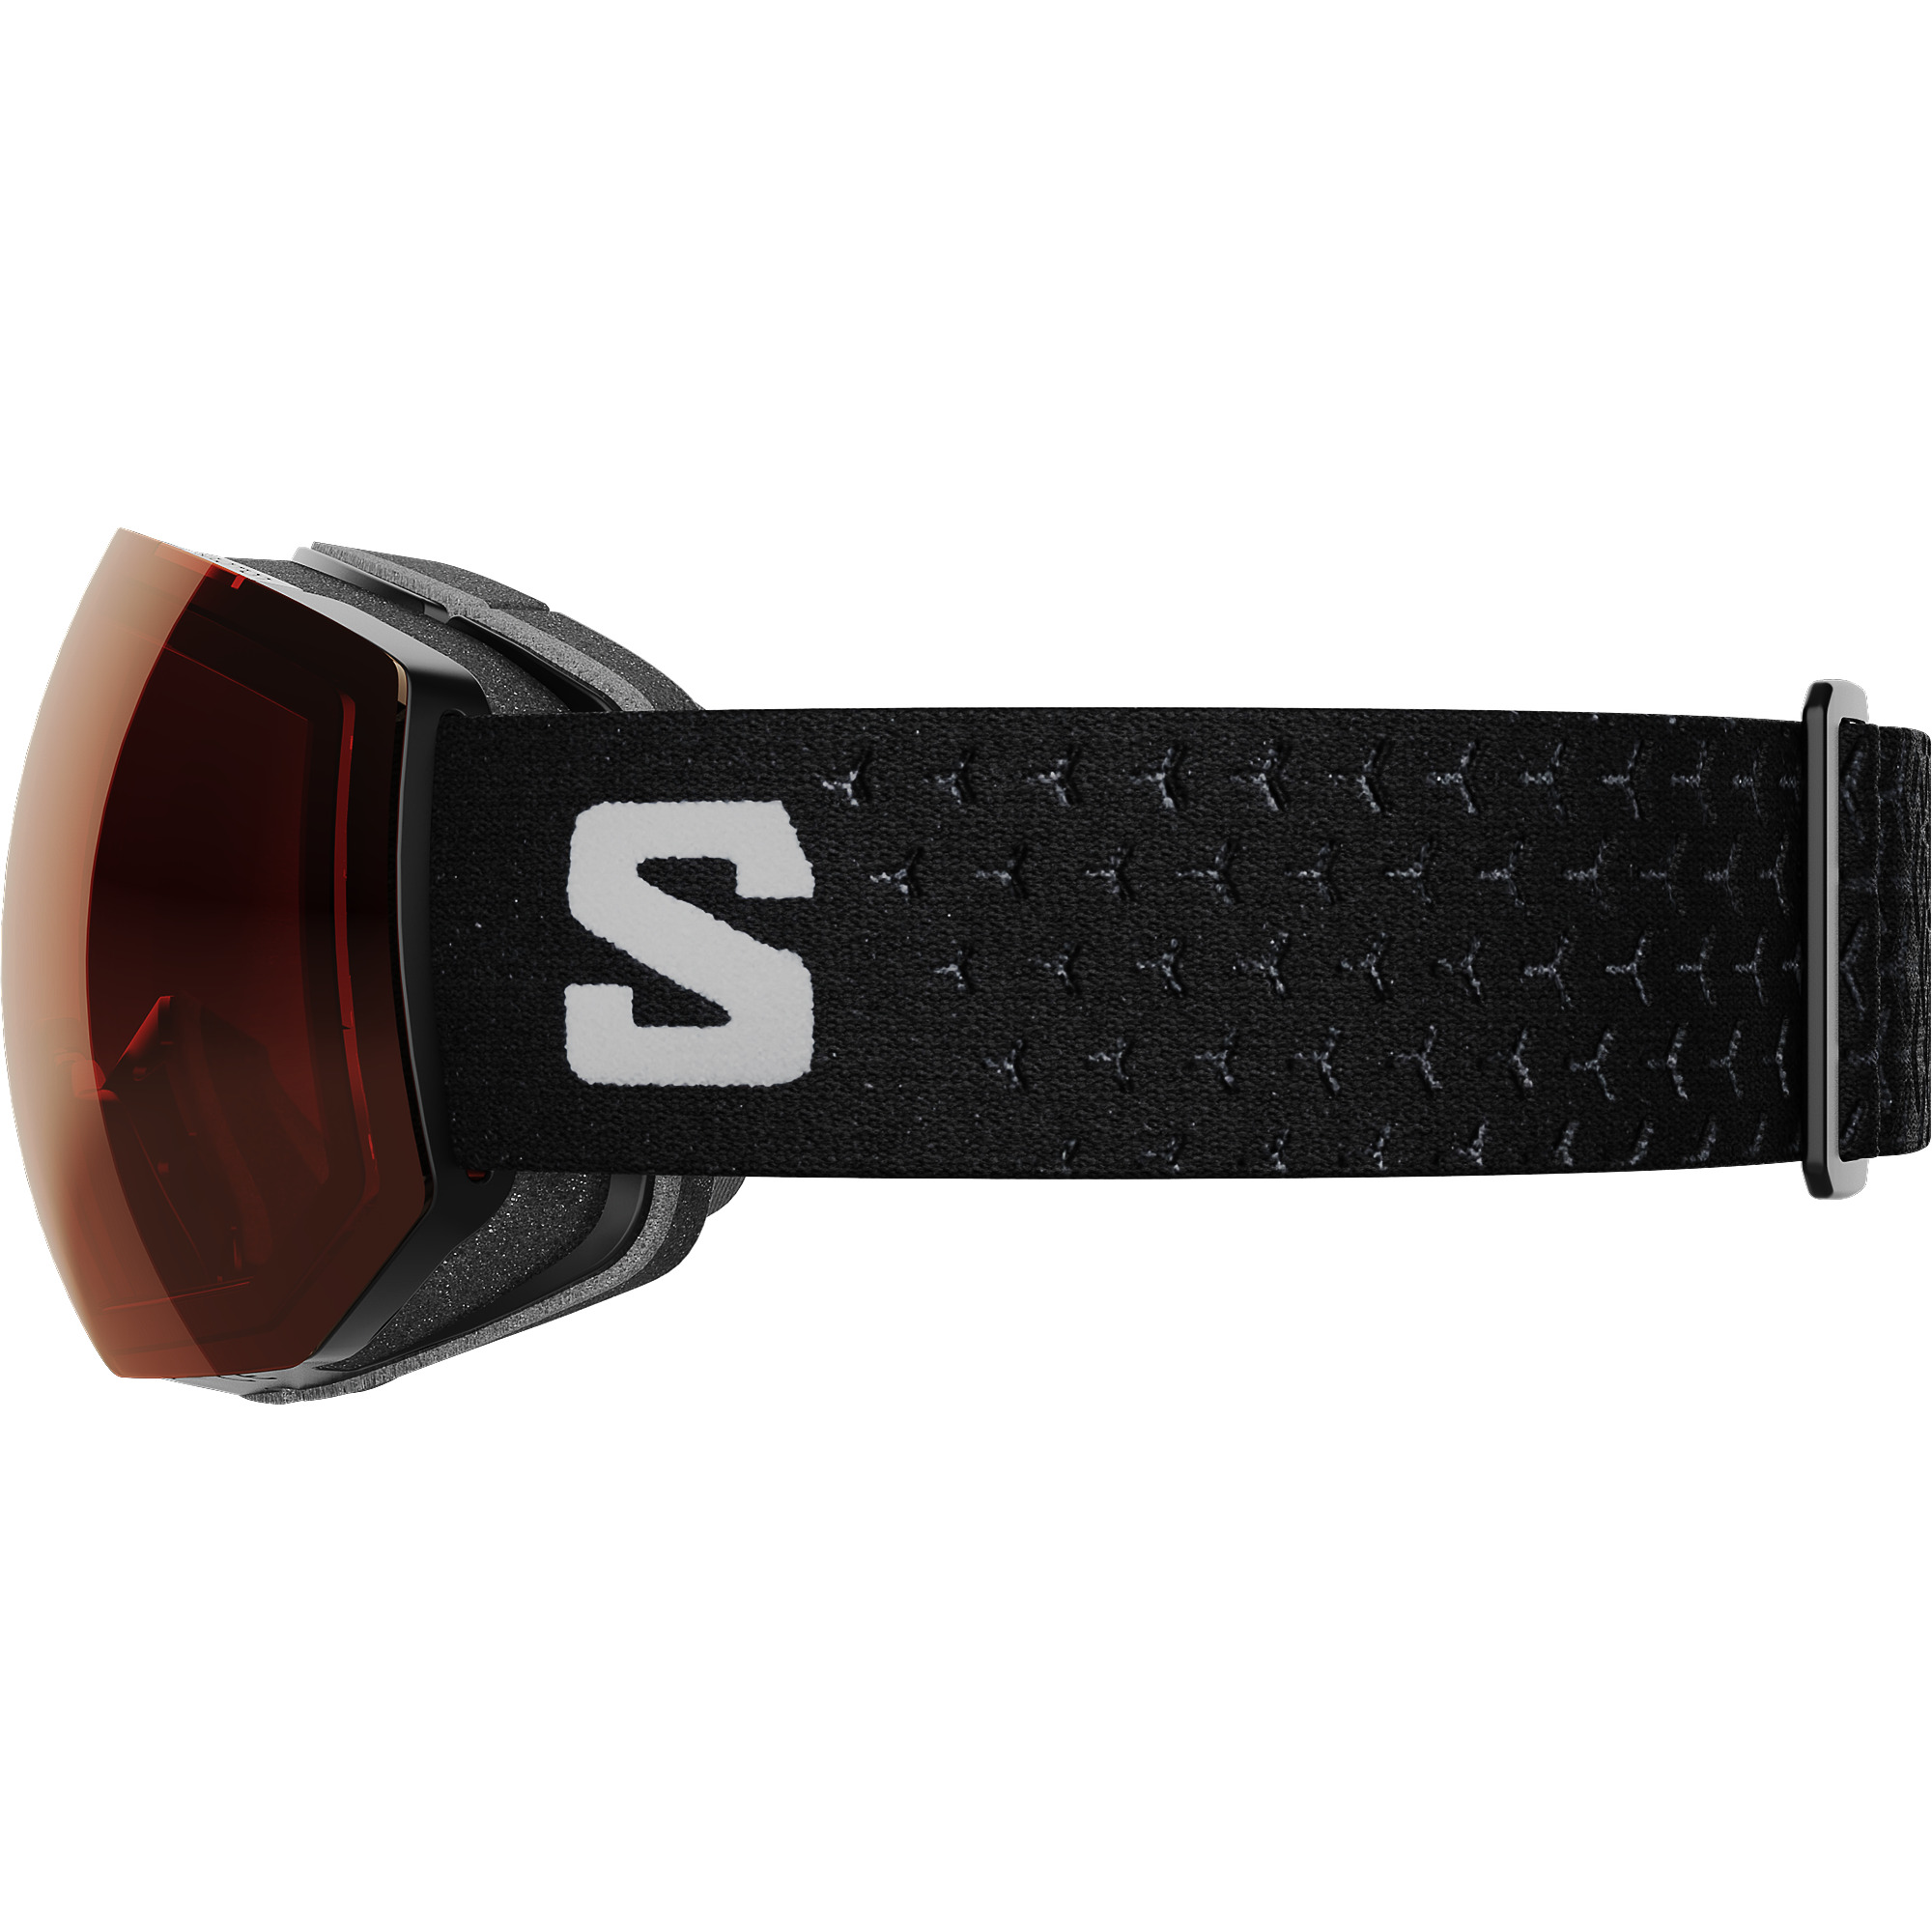 Salomon Radium Pro Sigma Snowboard/Ski Goggles